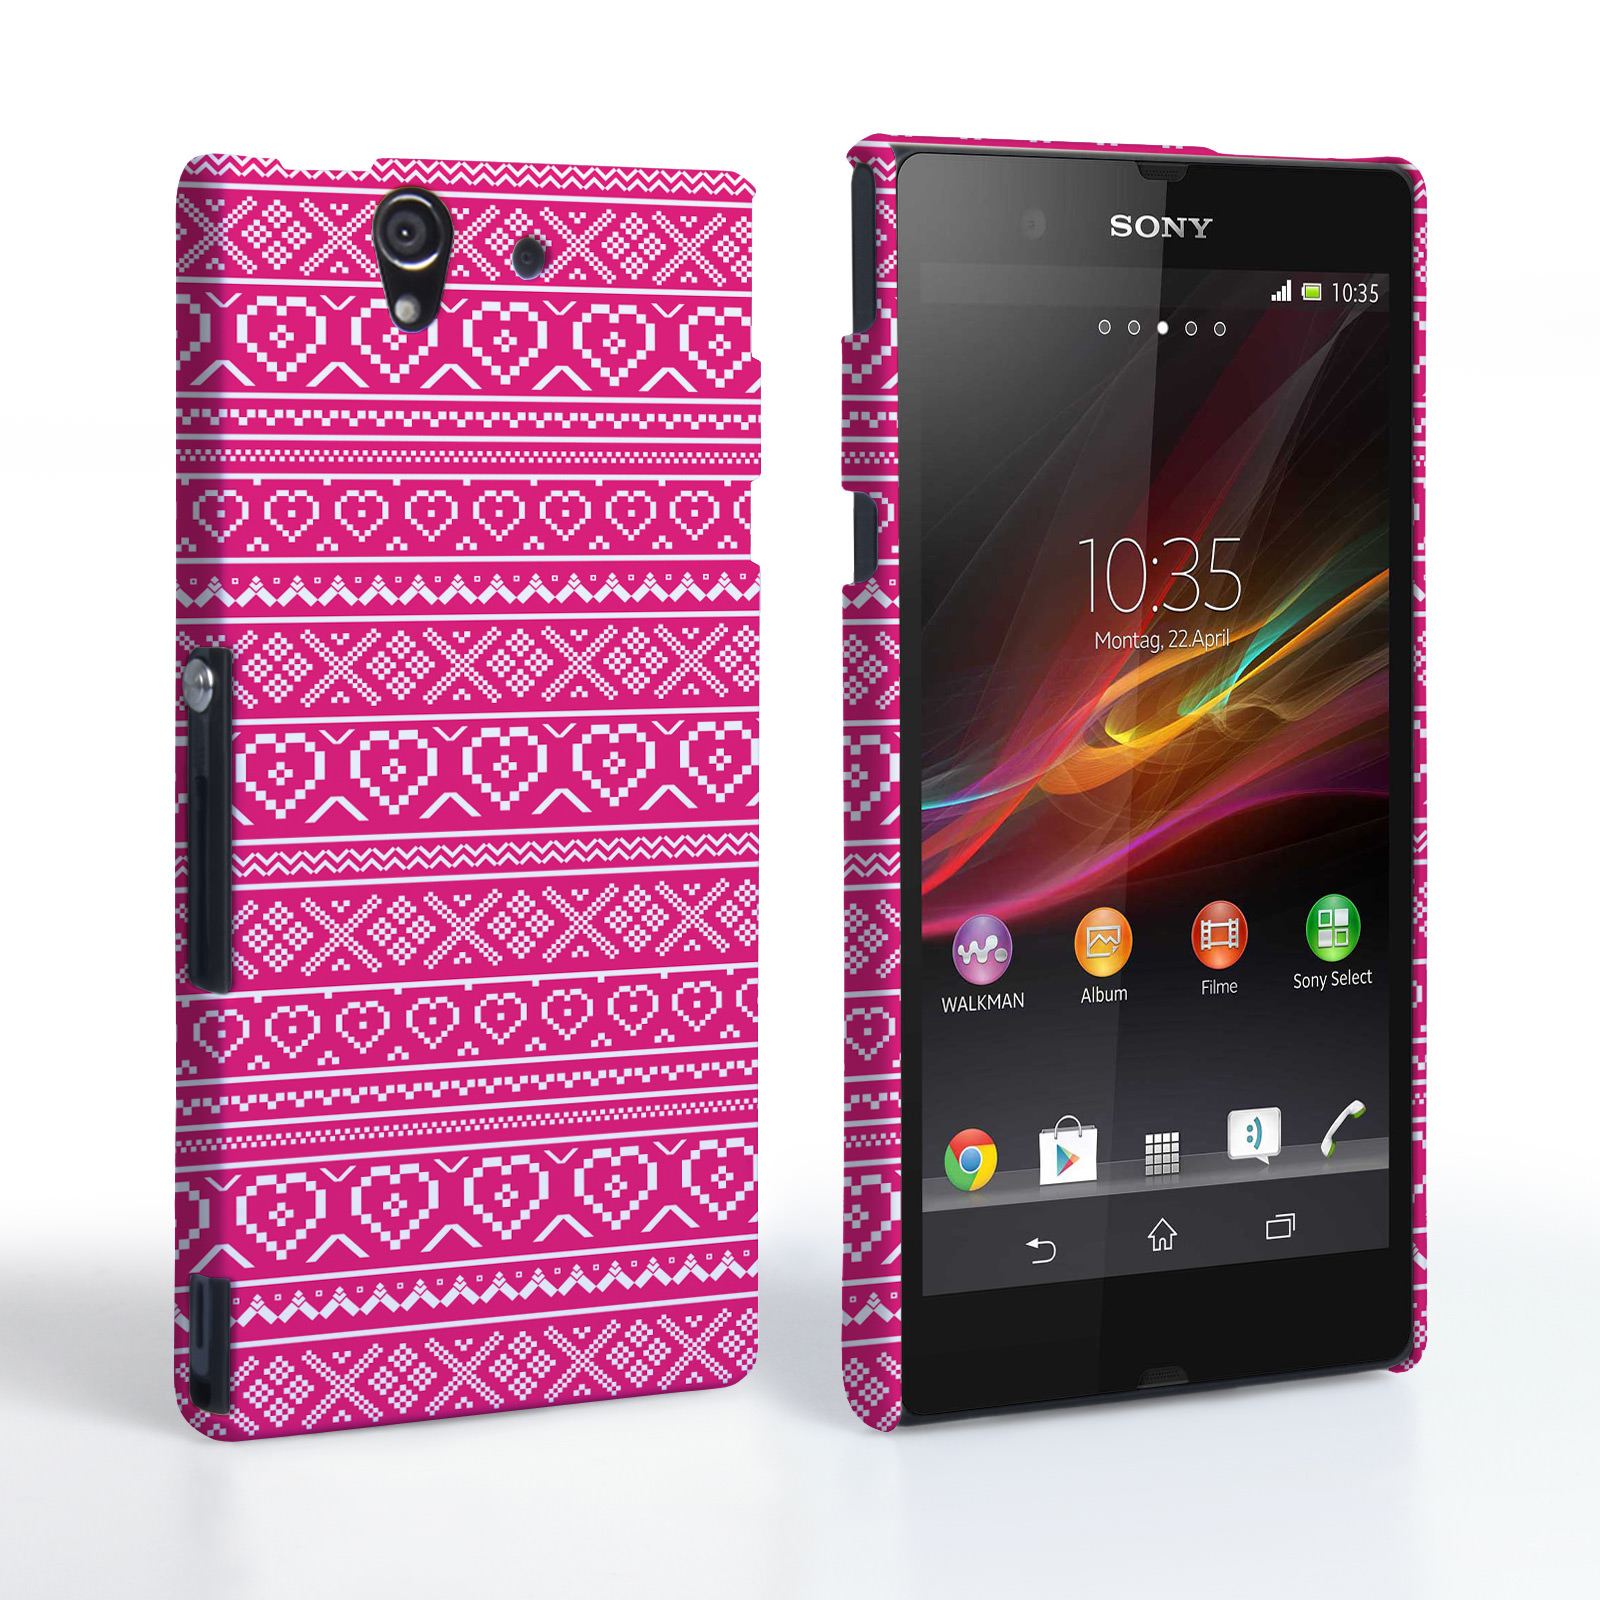 Caseflex Sony Xperia Z Fairisle Case – Pink and White